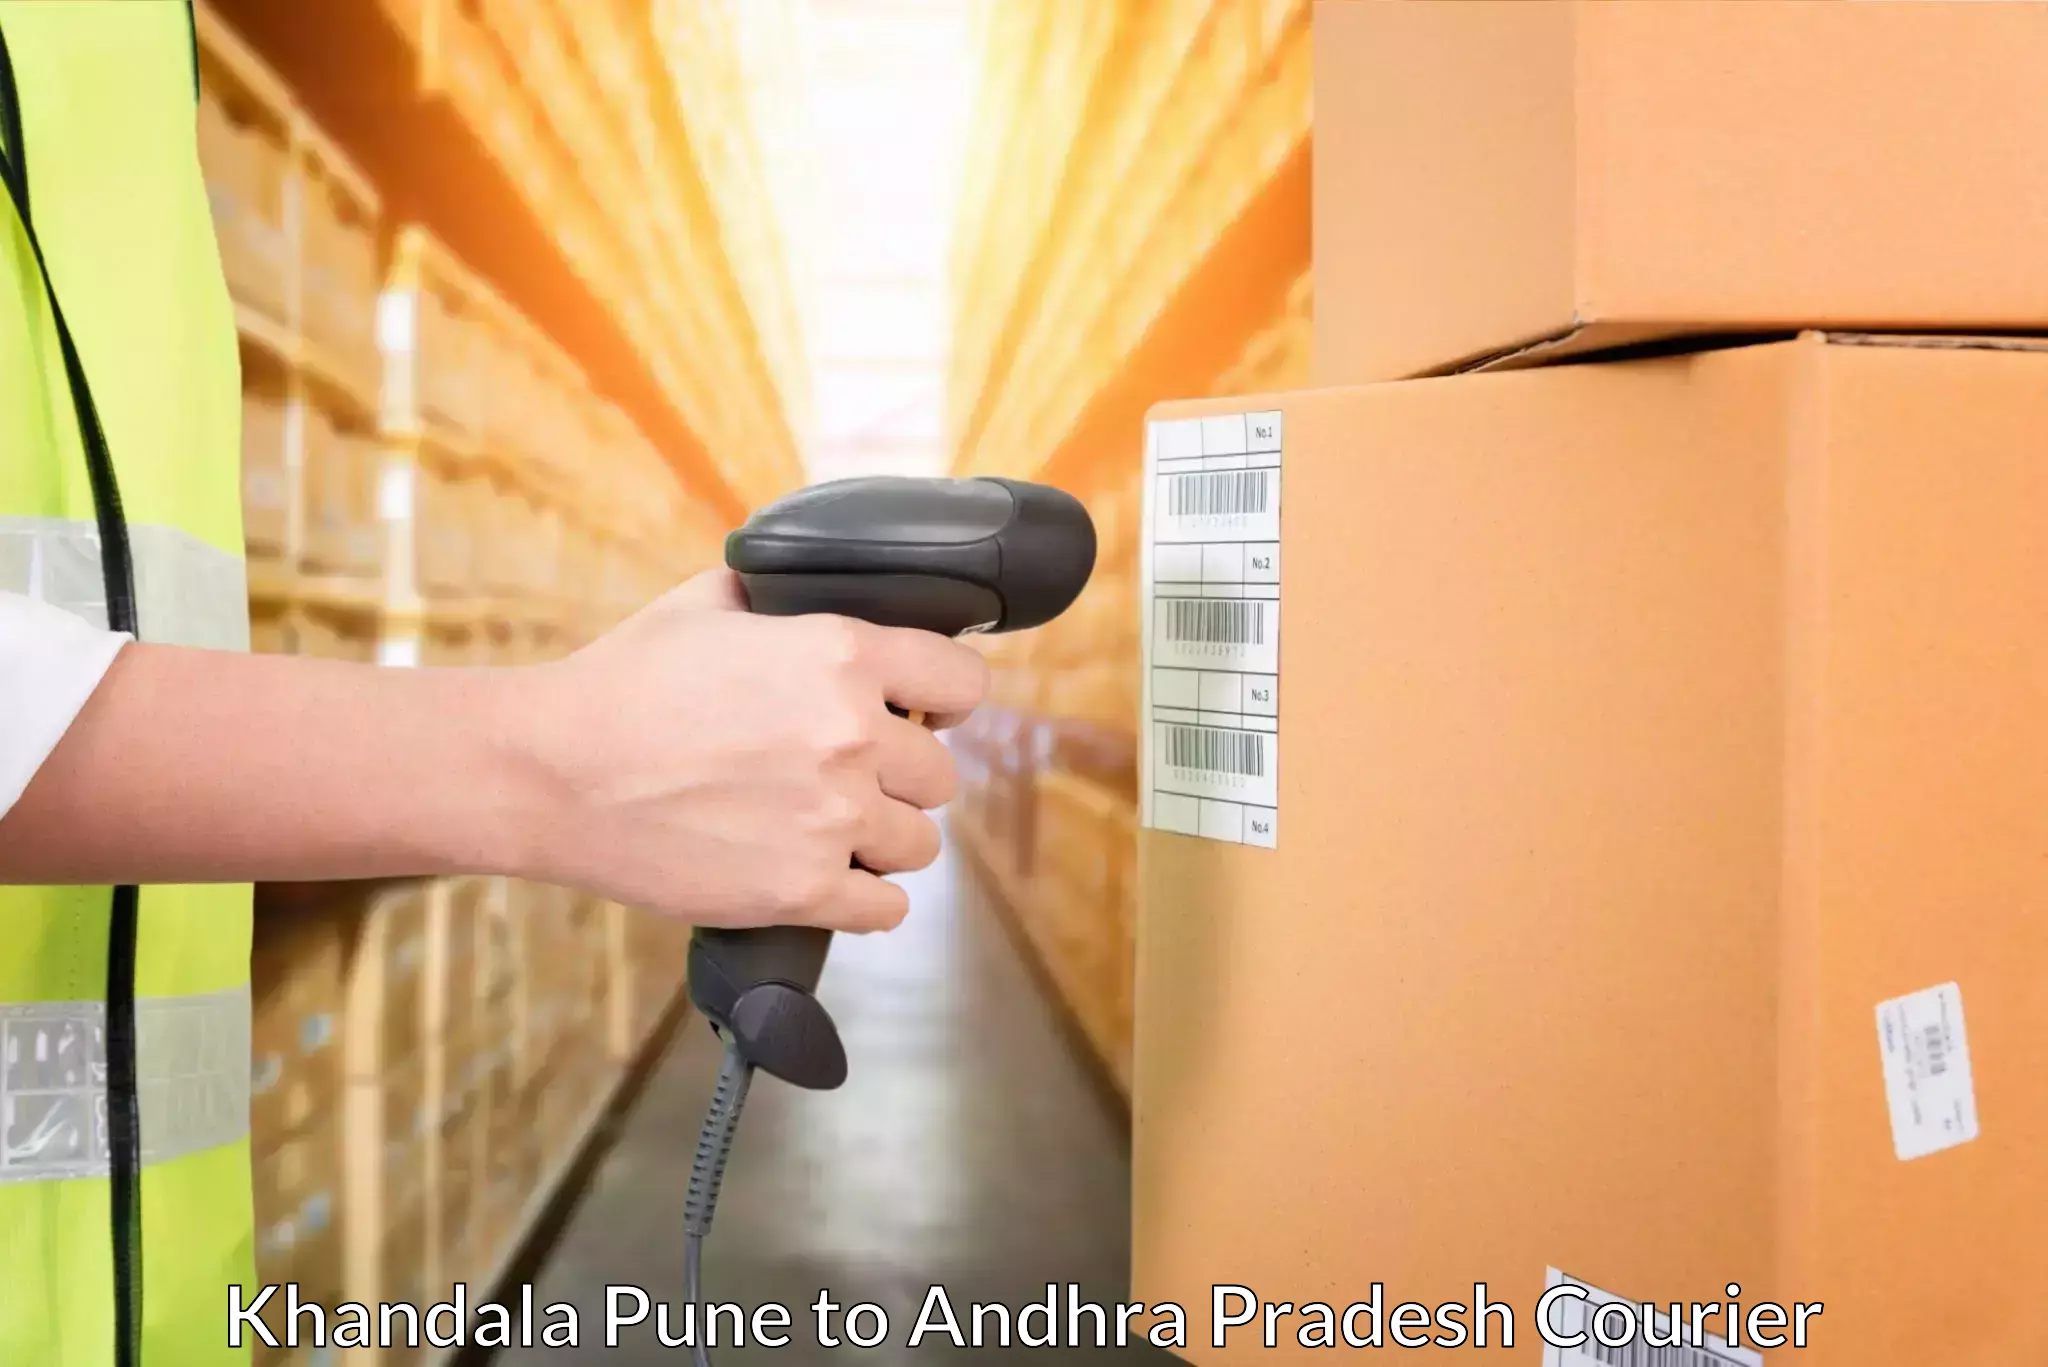 Logistics service provider Khandala Pune to Visakhapatnam Port